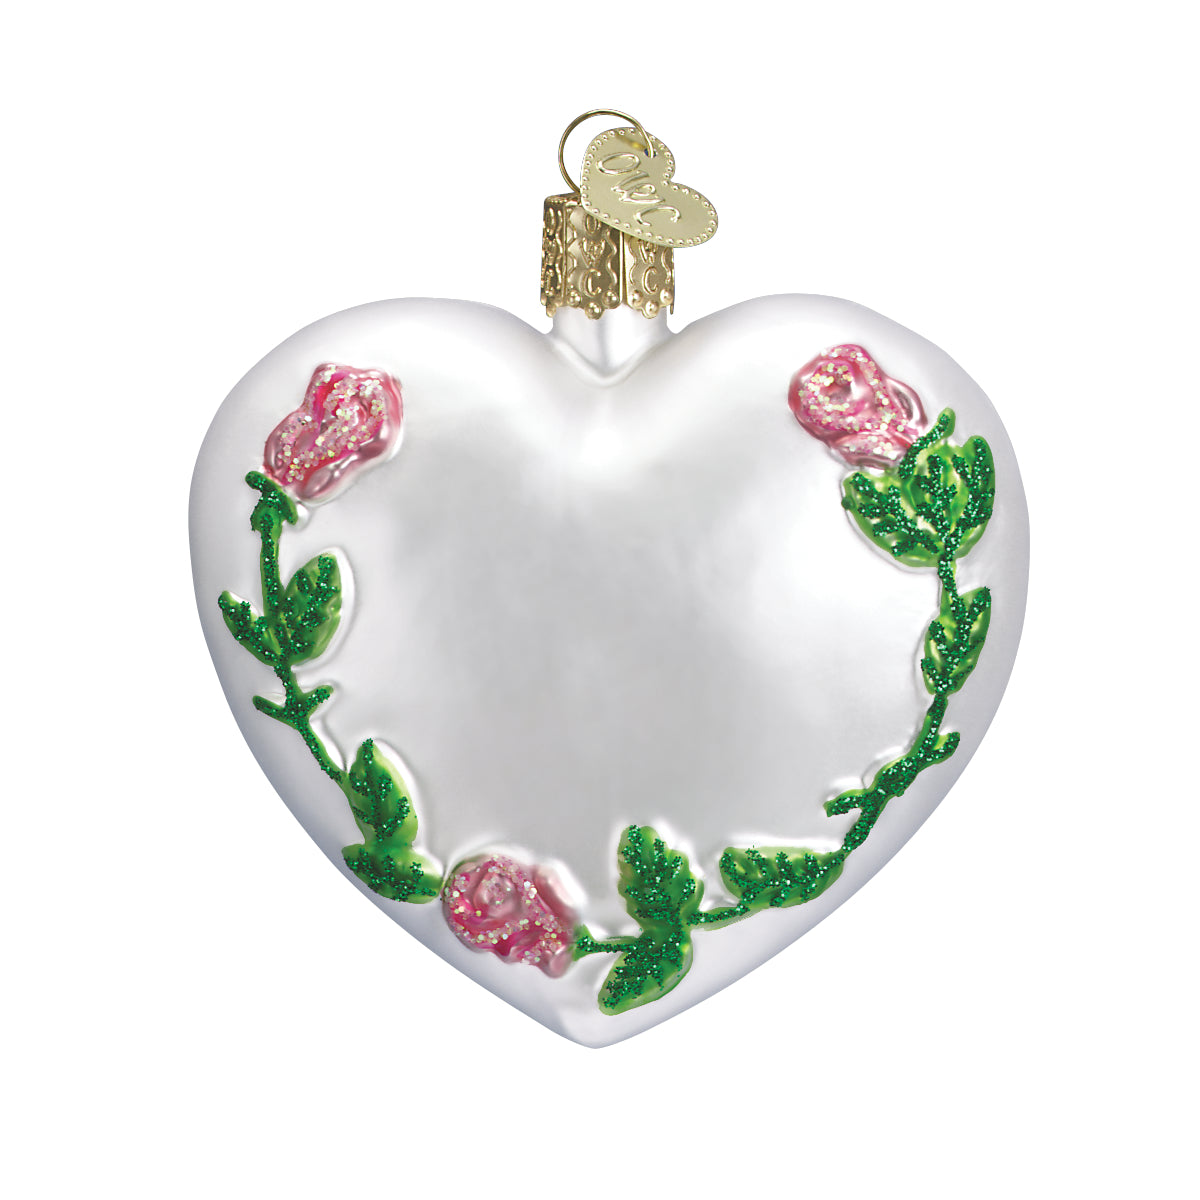 Wedding Heart Ornament